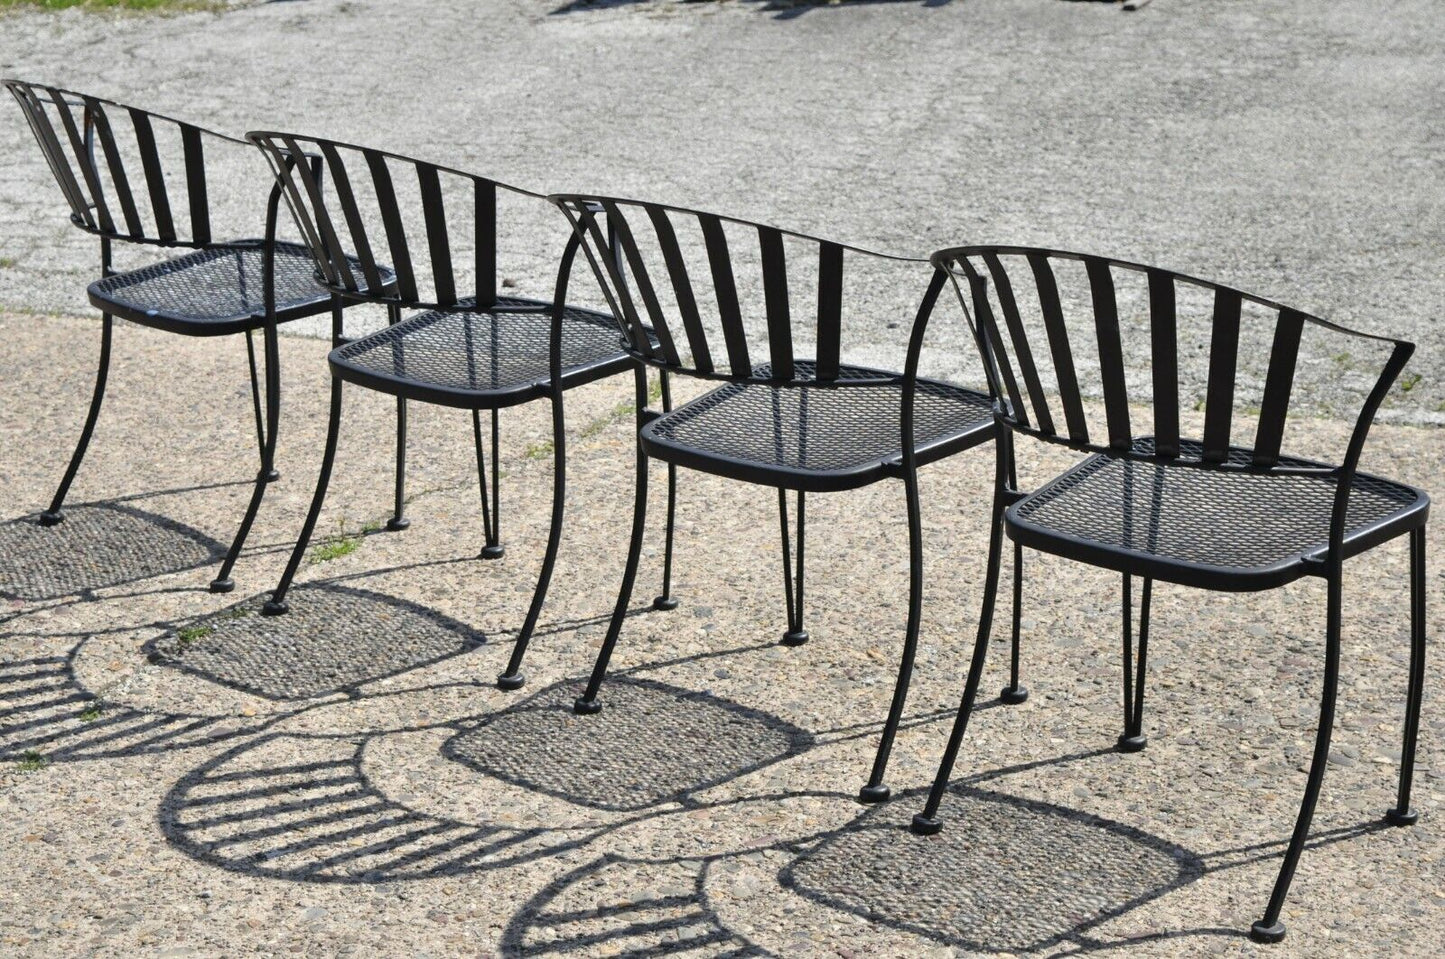 Modern Wrought Iron Barrel Back Sculptural Garden Patio Dining Chairs - Set of 4